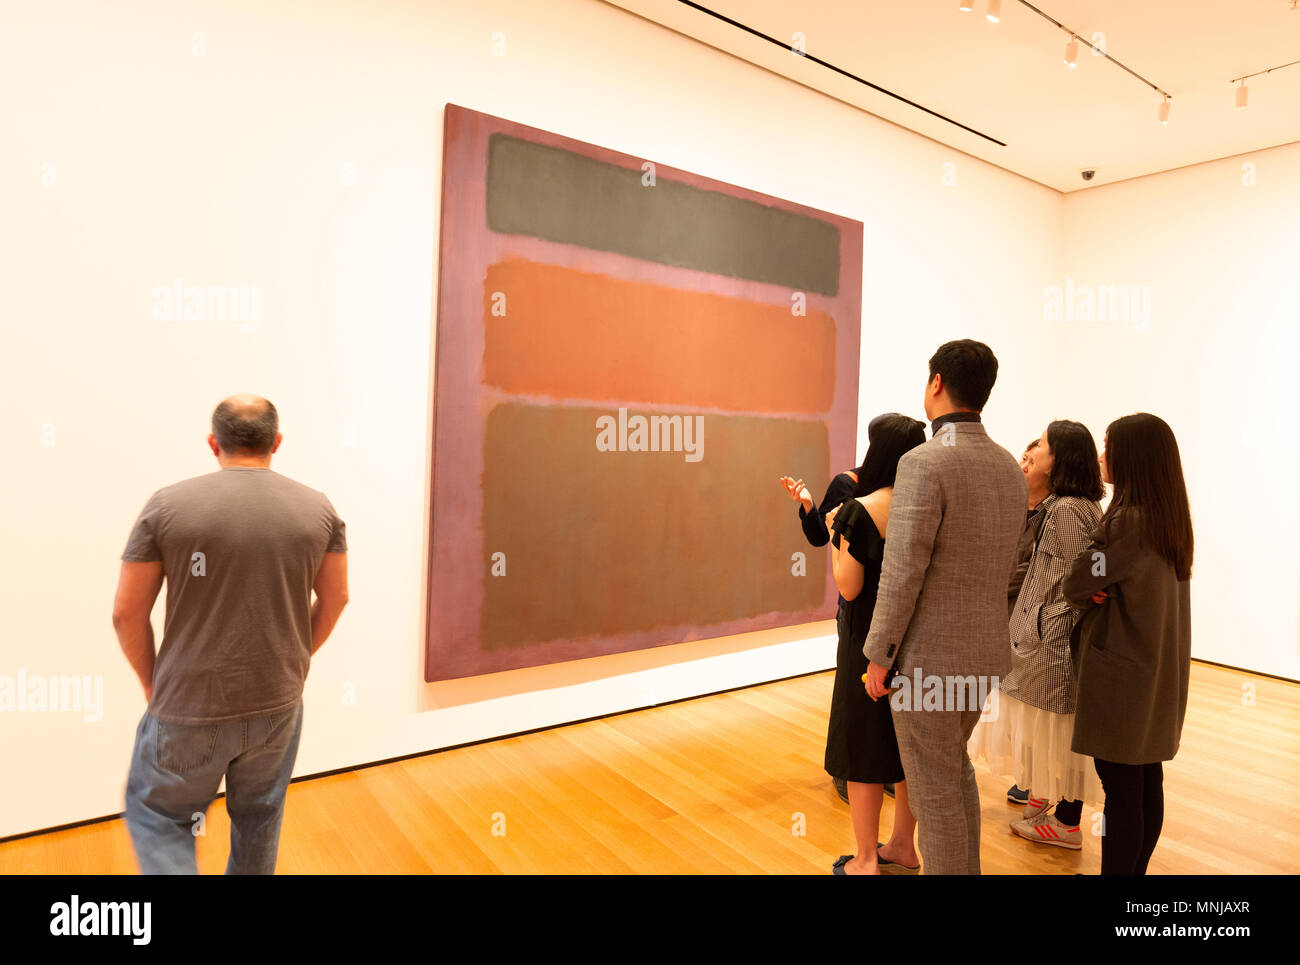 MoMA New York - personnes regardant une peinture de Mark Rothko, Museum of Modern Art, New York, United States Banque D'Images